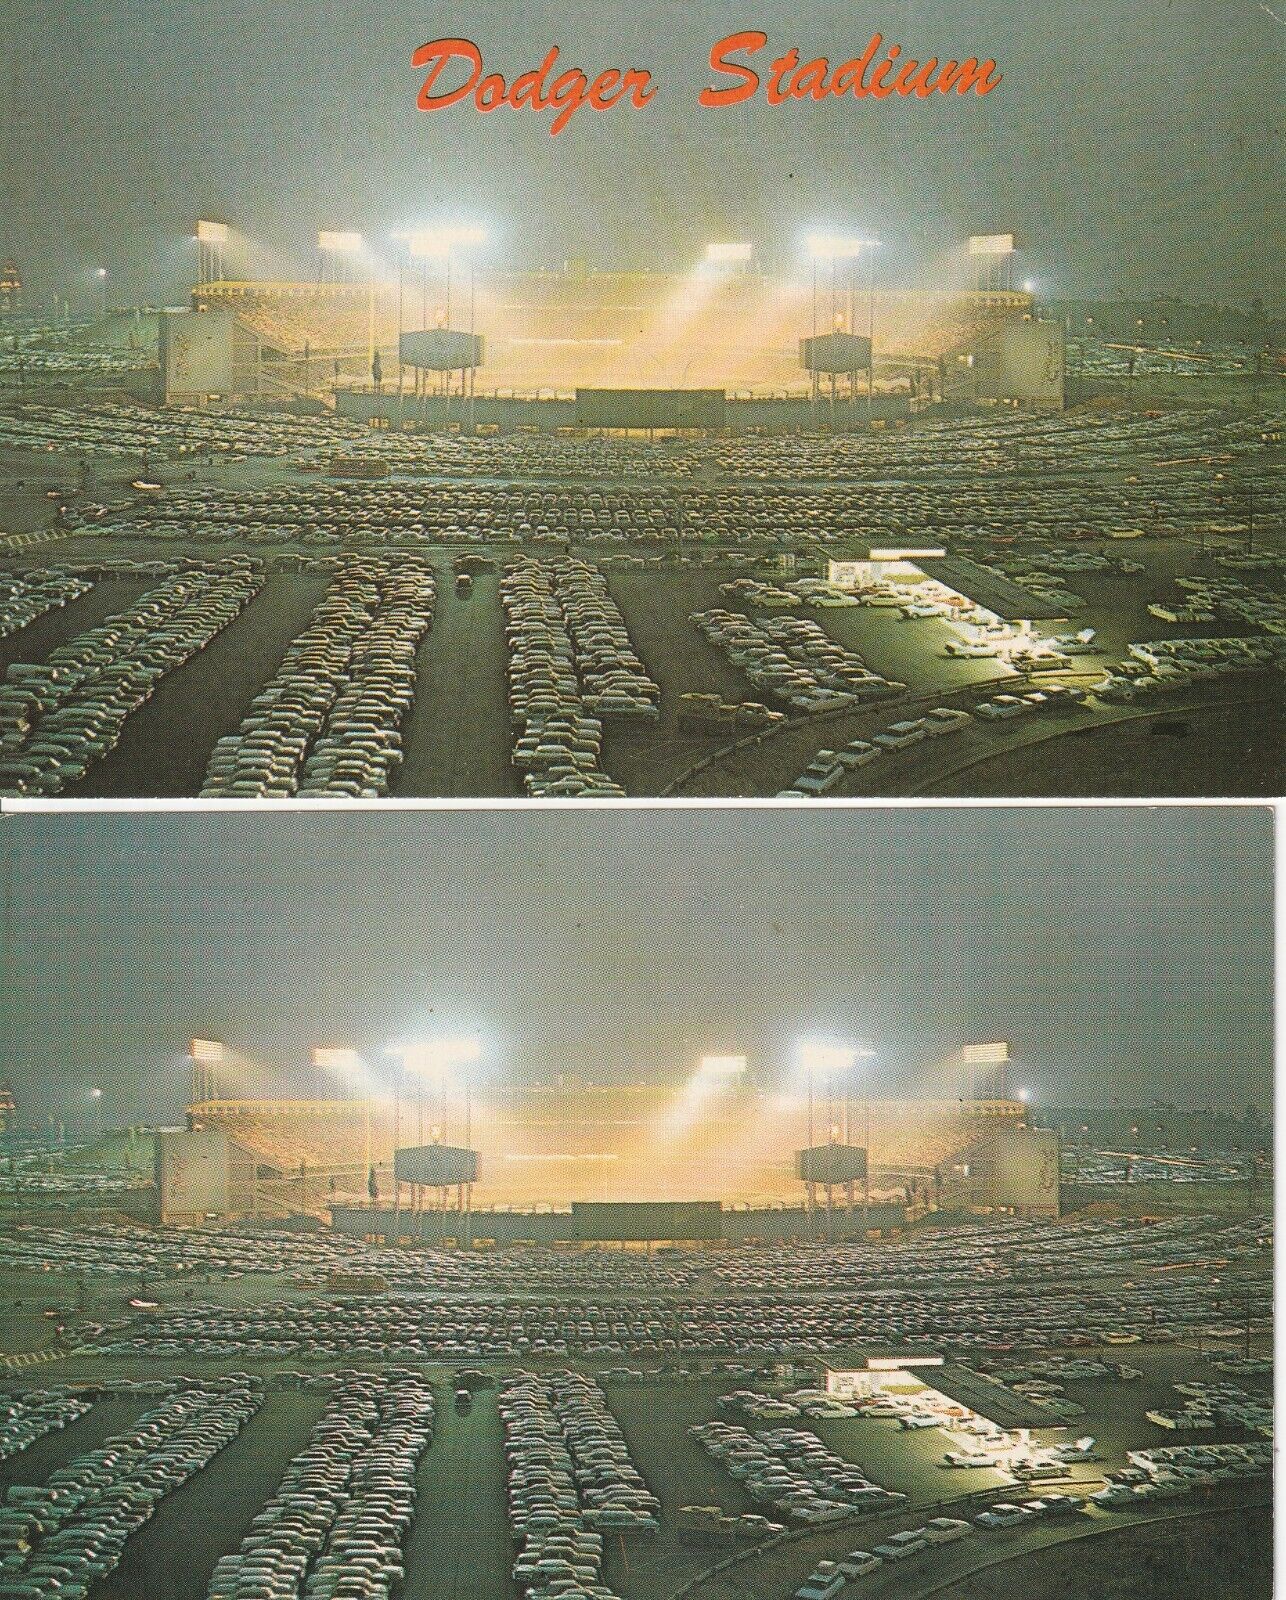 (2) Los Angeles Dodgers Dodger Stadium Postcards - Same View Title Variations #1